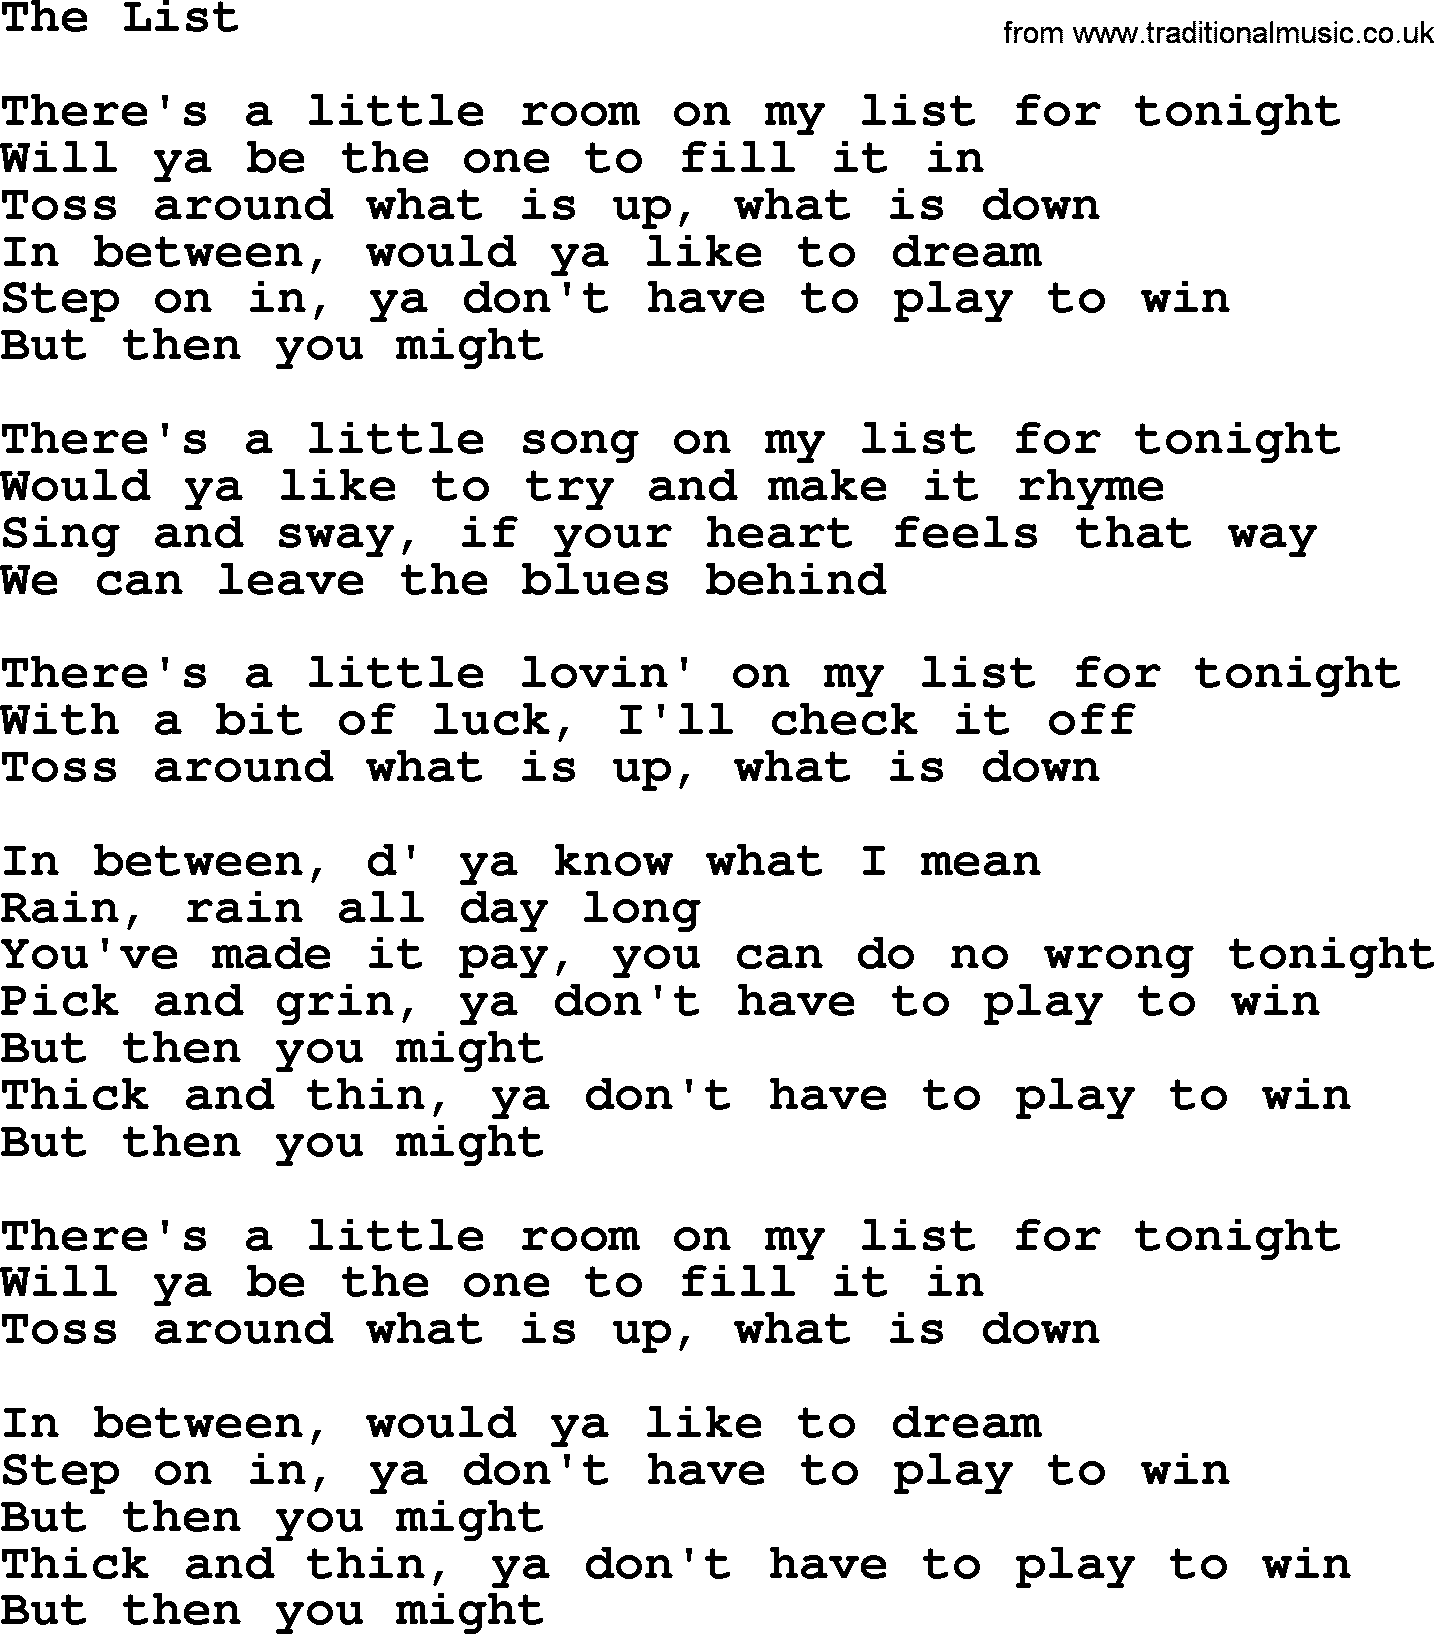 Gordon Lightfoot song The List, lyrics